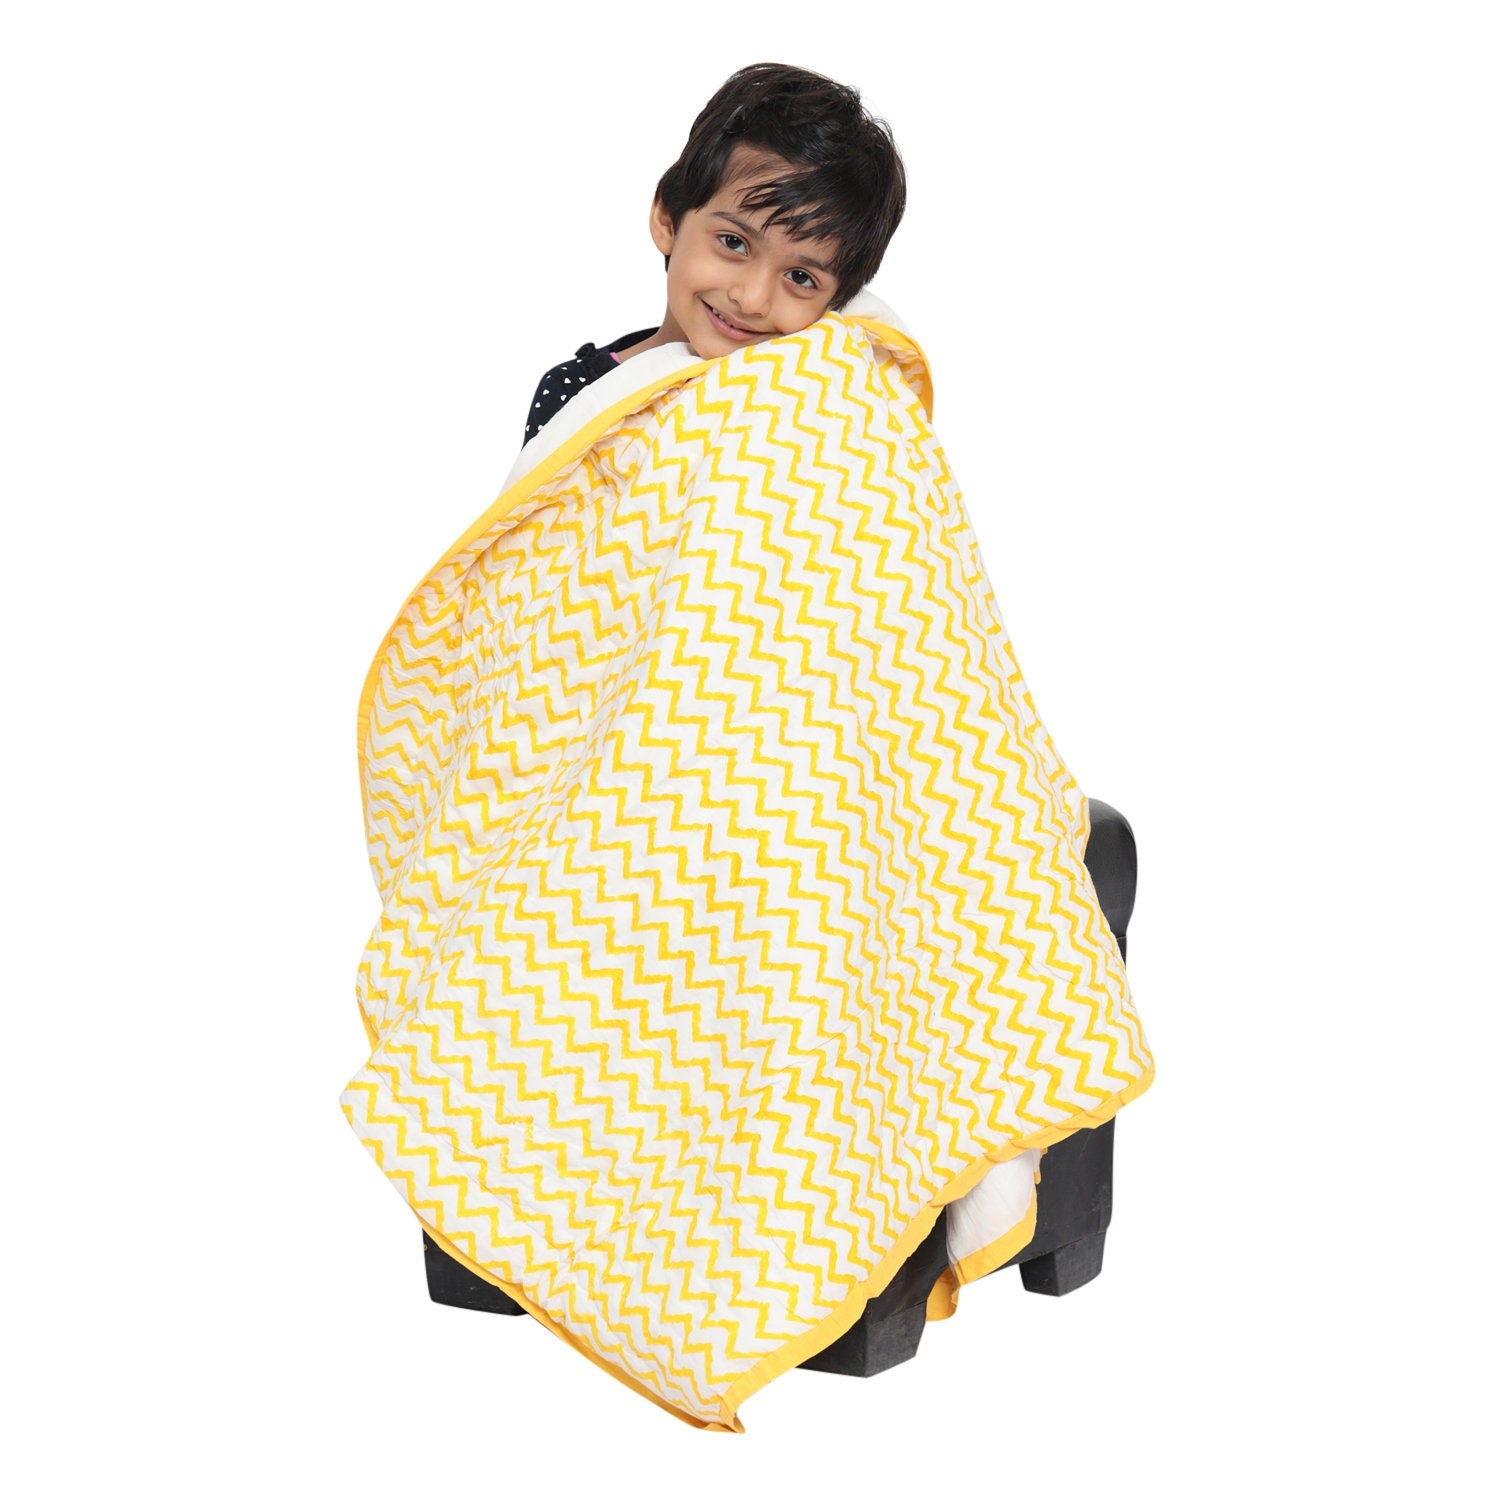 Baby Quilt/Blanket - Organic Cotton - Baby, Infants, Toddlers, Preschoolers, Children - Soft Warm Handmade - Aztec - Yellow